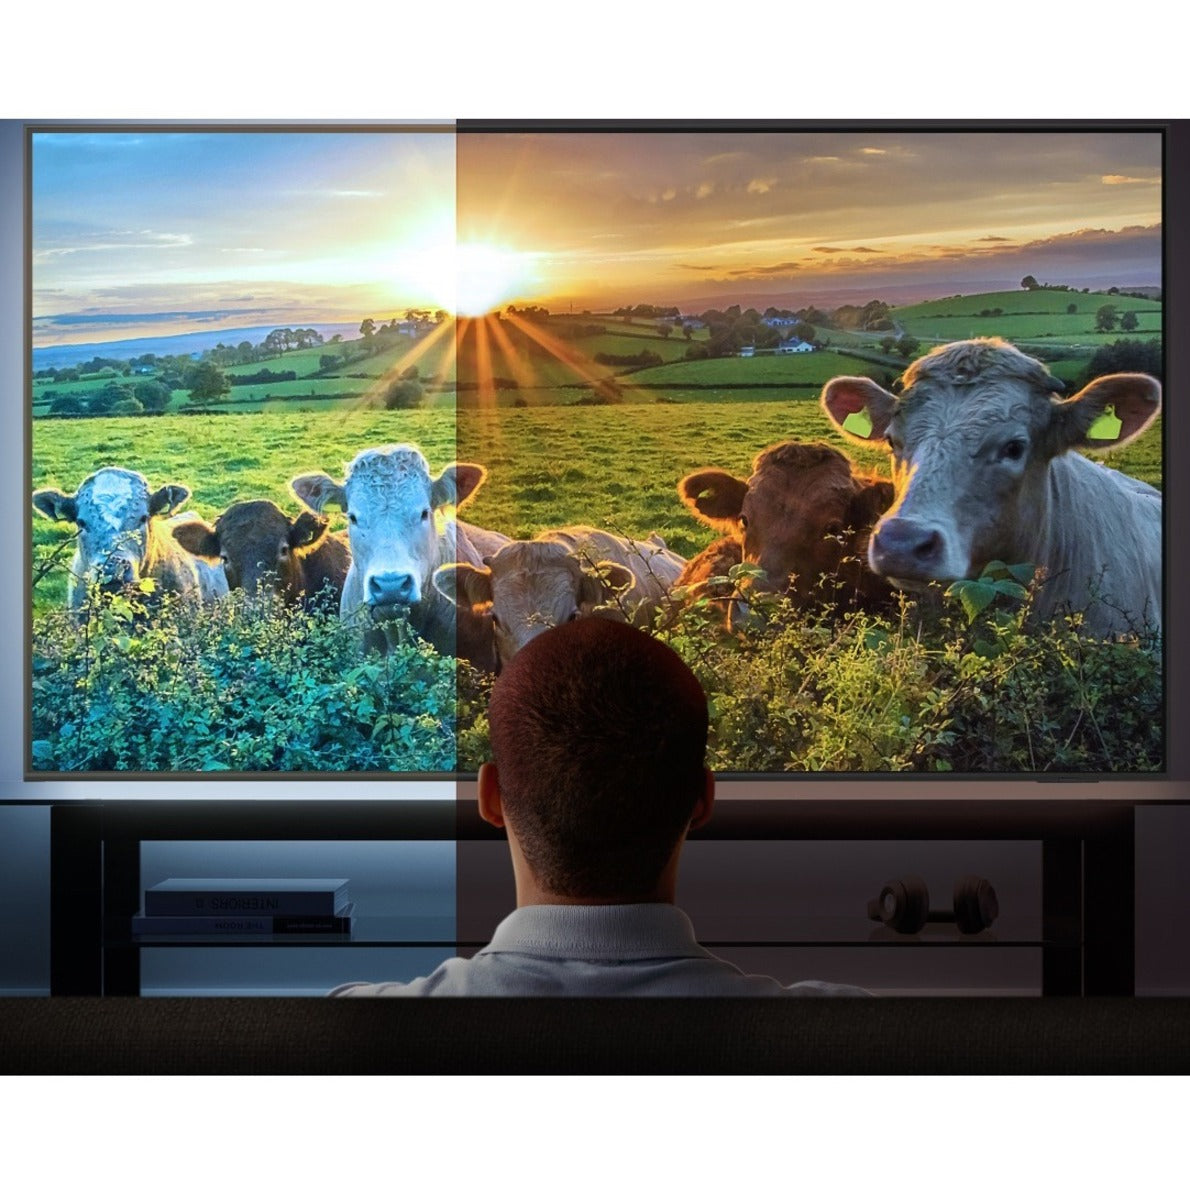 Samsung QN90B QN85QN90BAF 84.5" Smart LED-LCD TV - 4K UHDTV - Titan Black Sand Black